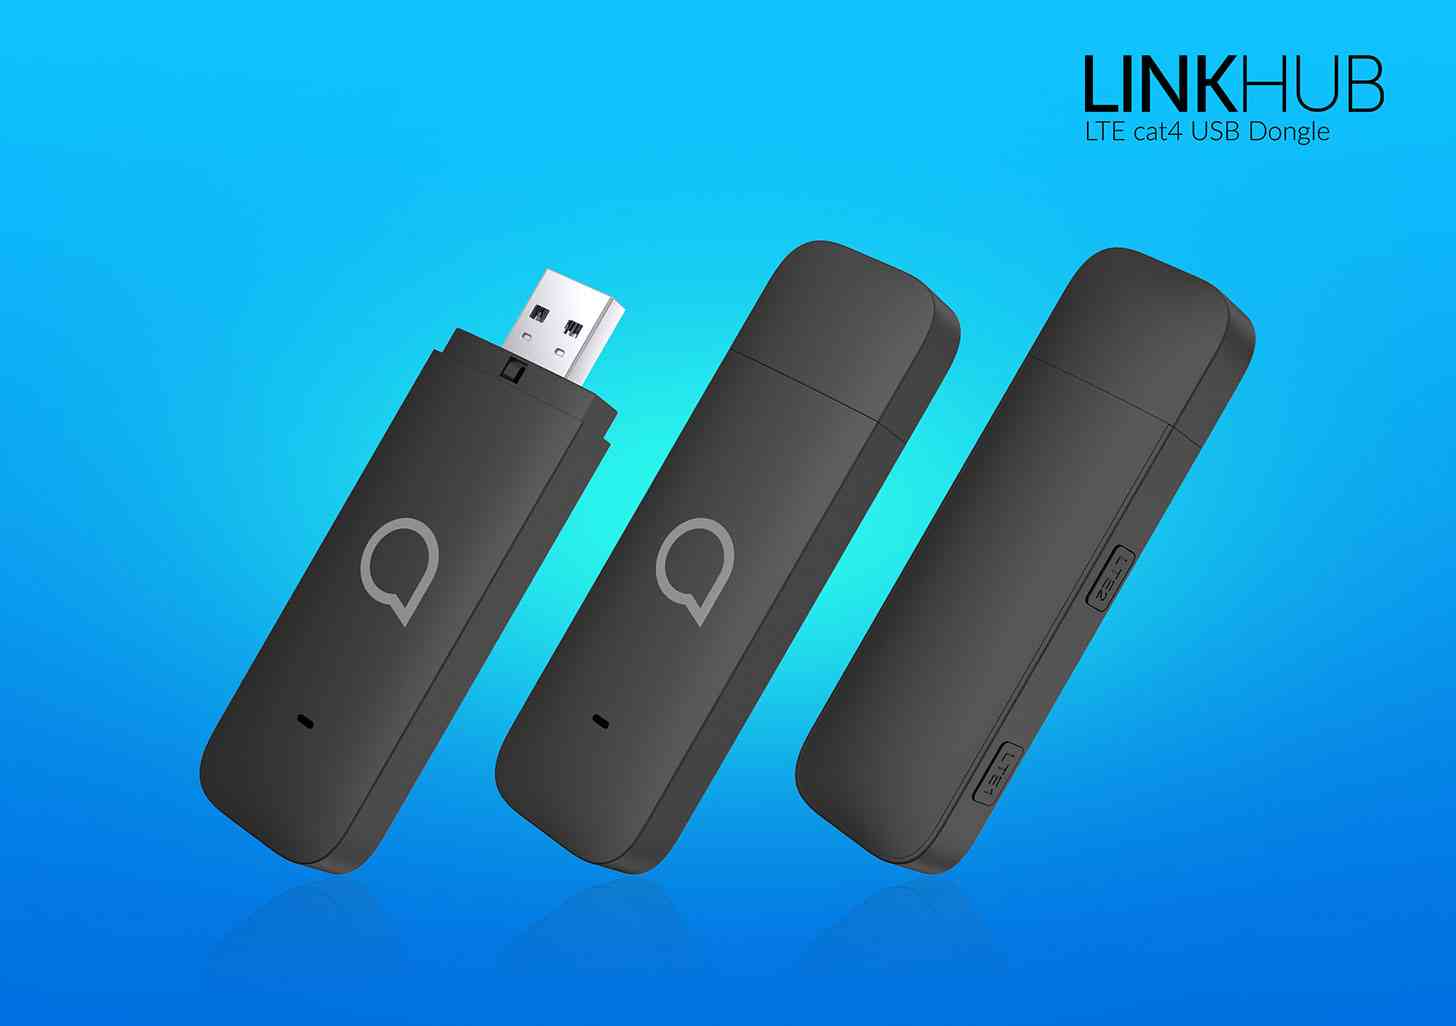 Alcatel LinkKey 4G LTE USB modem